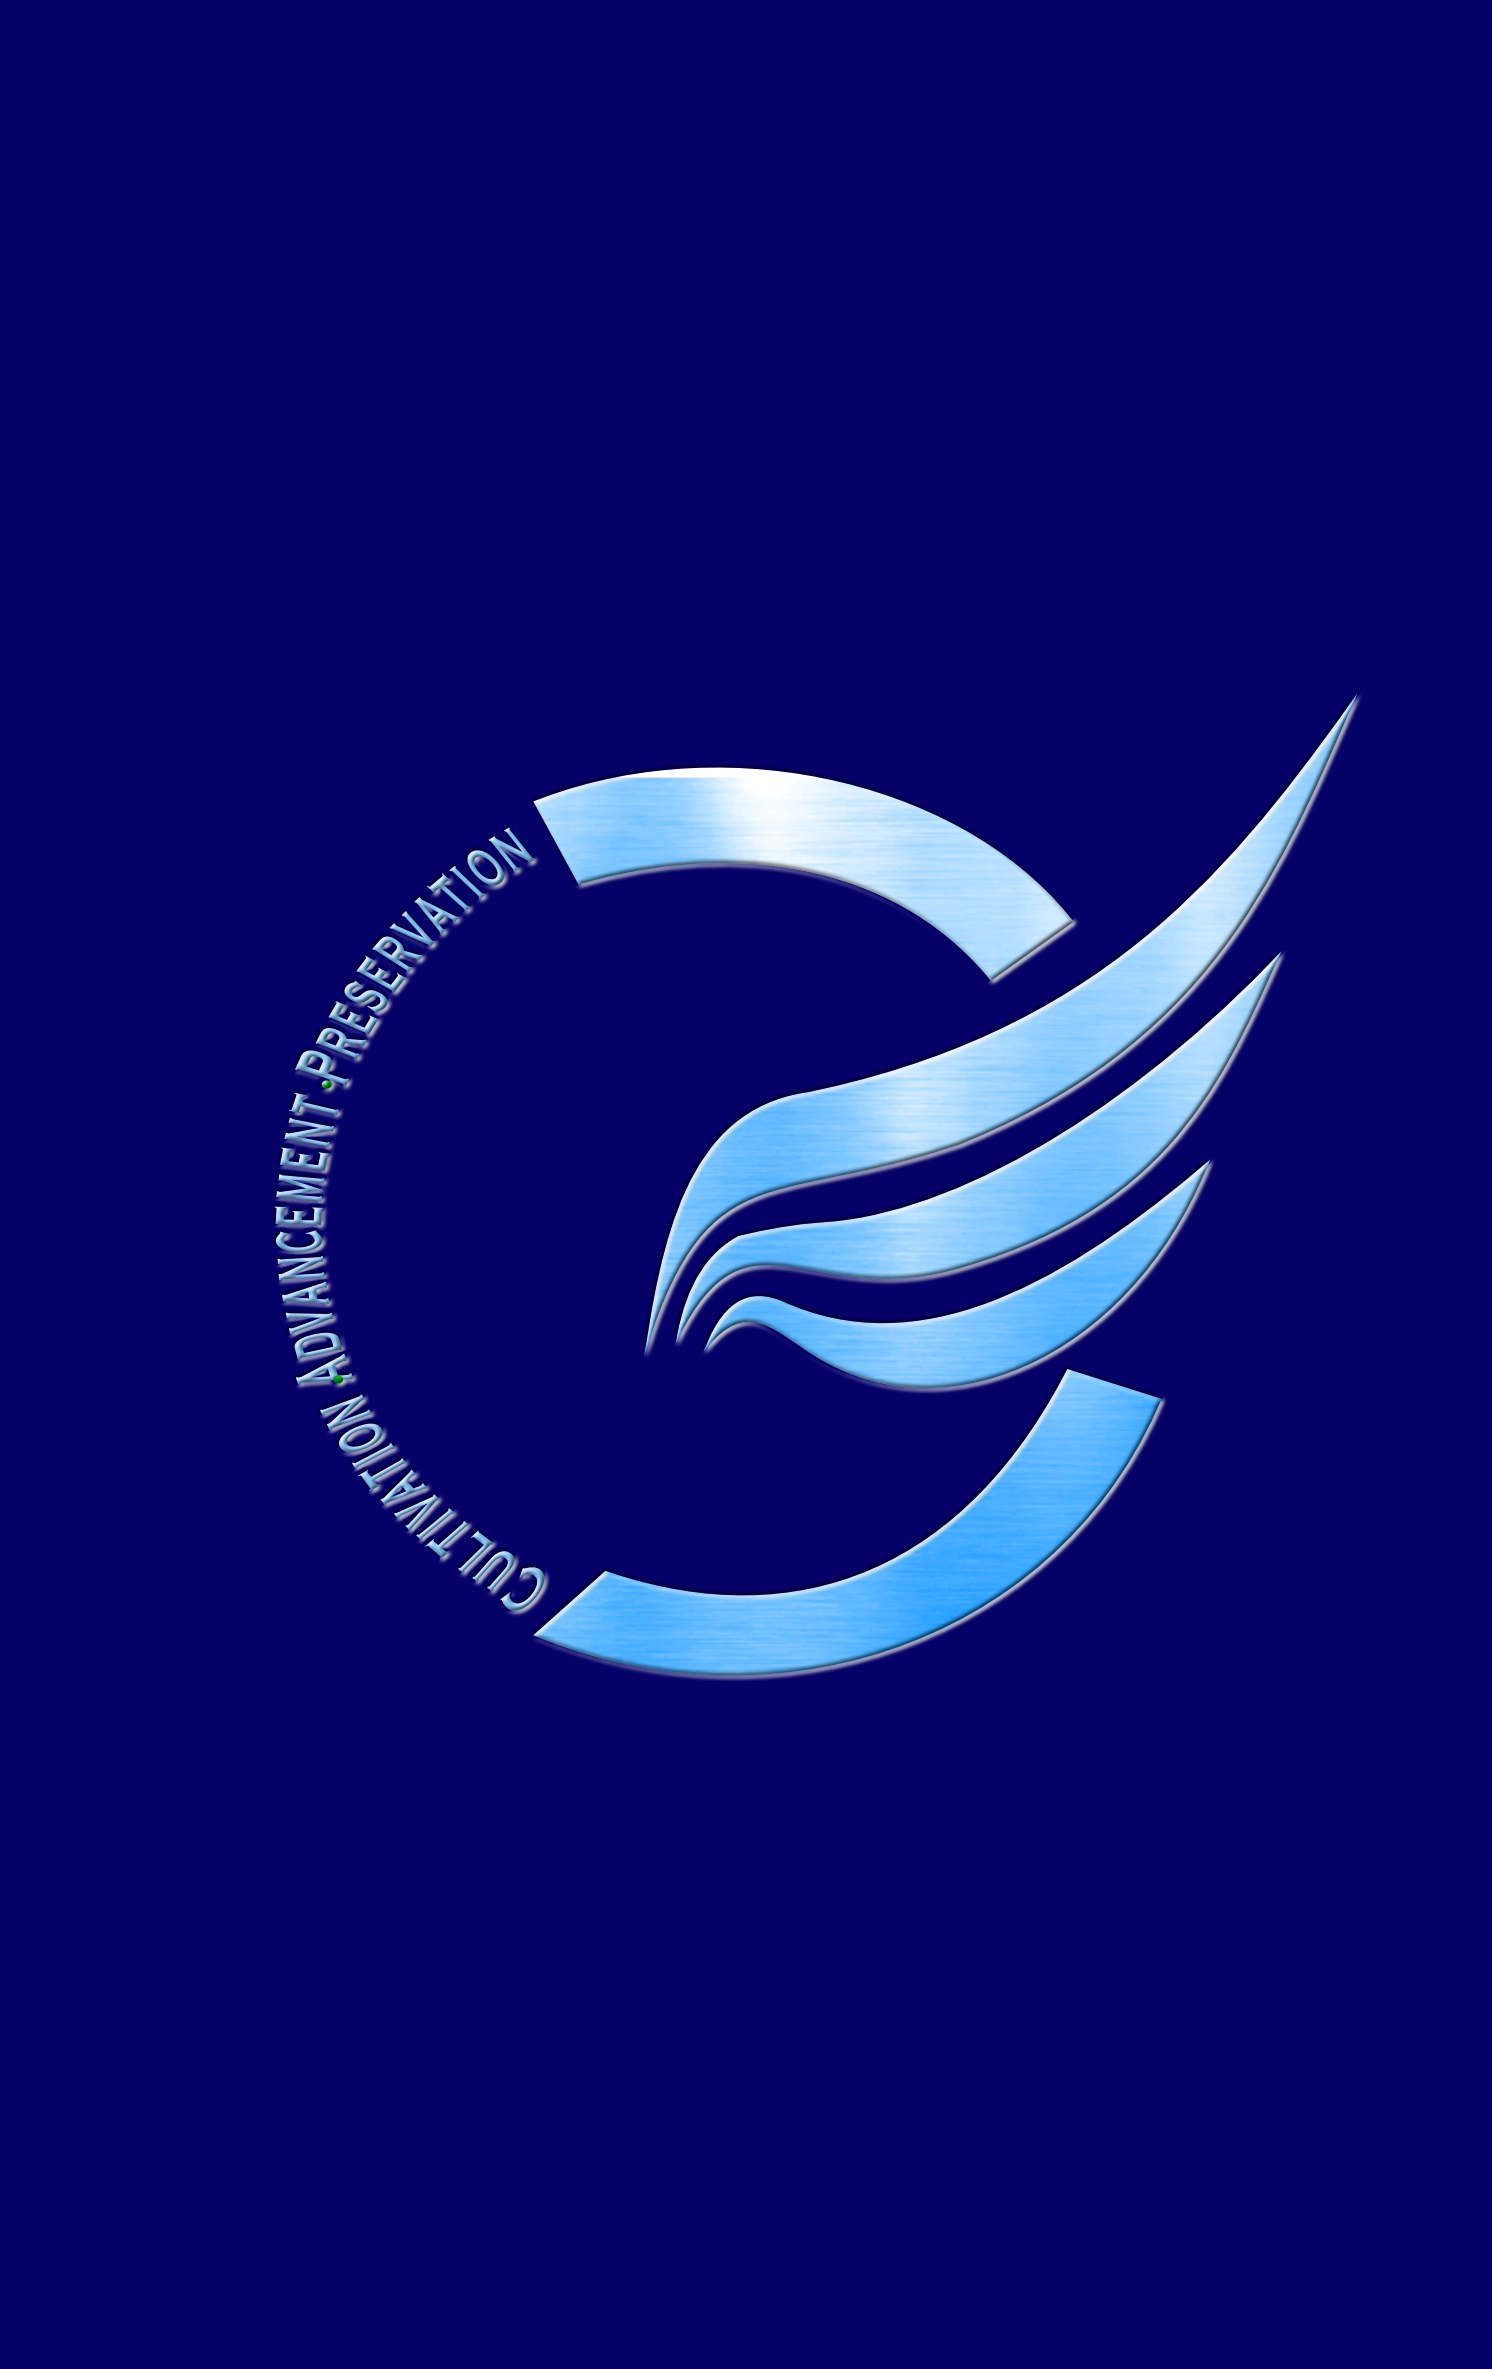 Cap Enterprise, LLC Logo